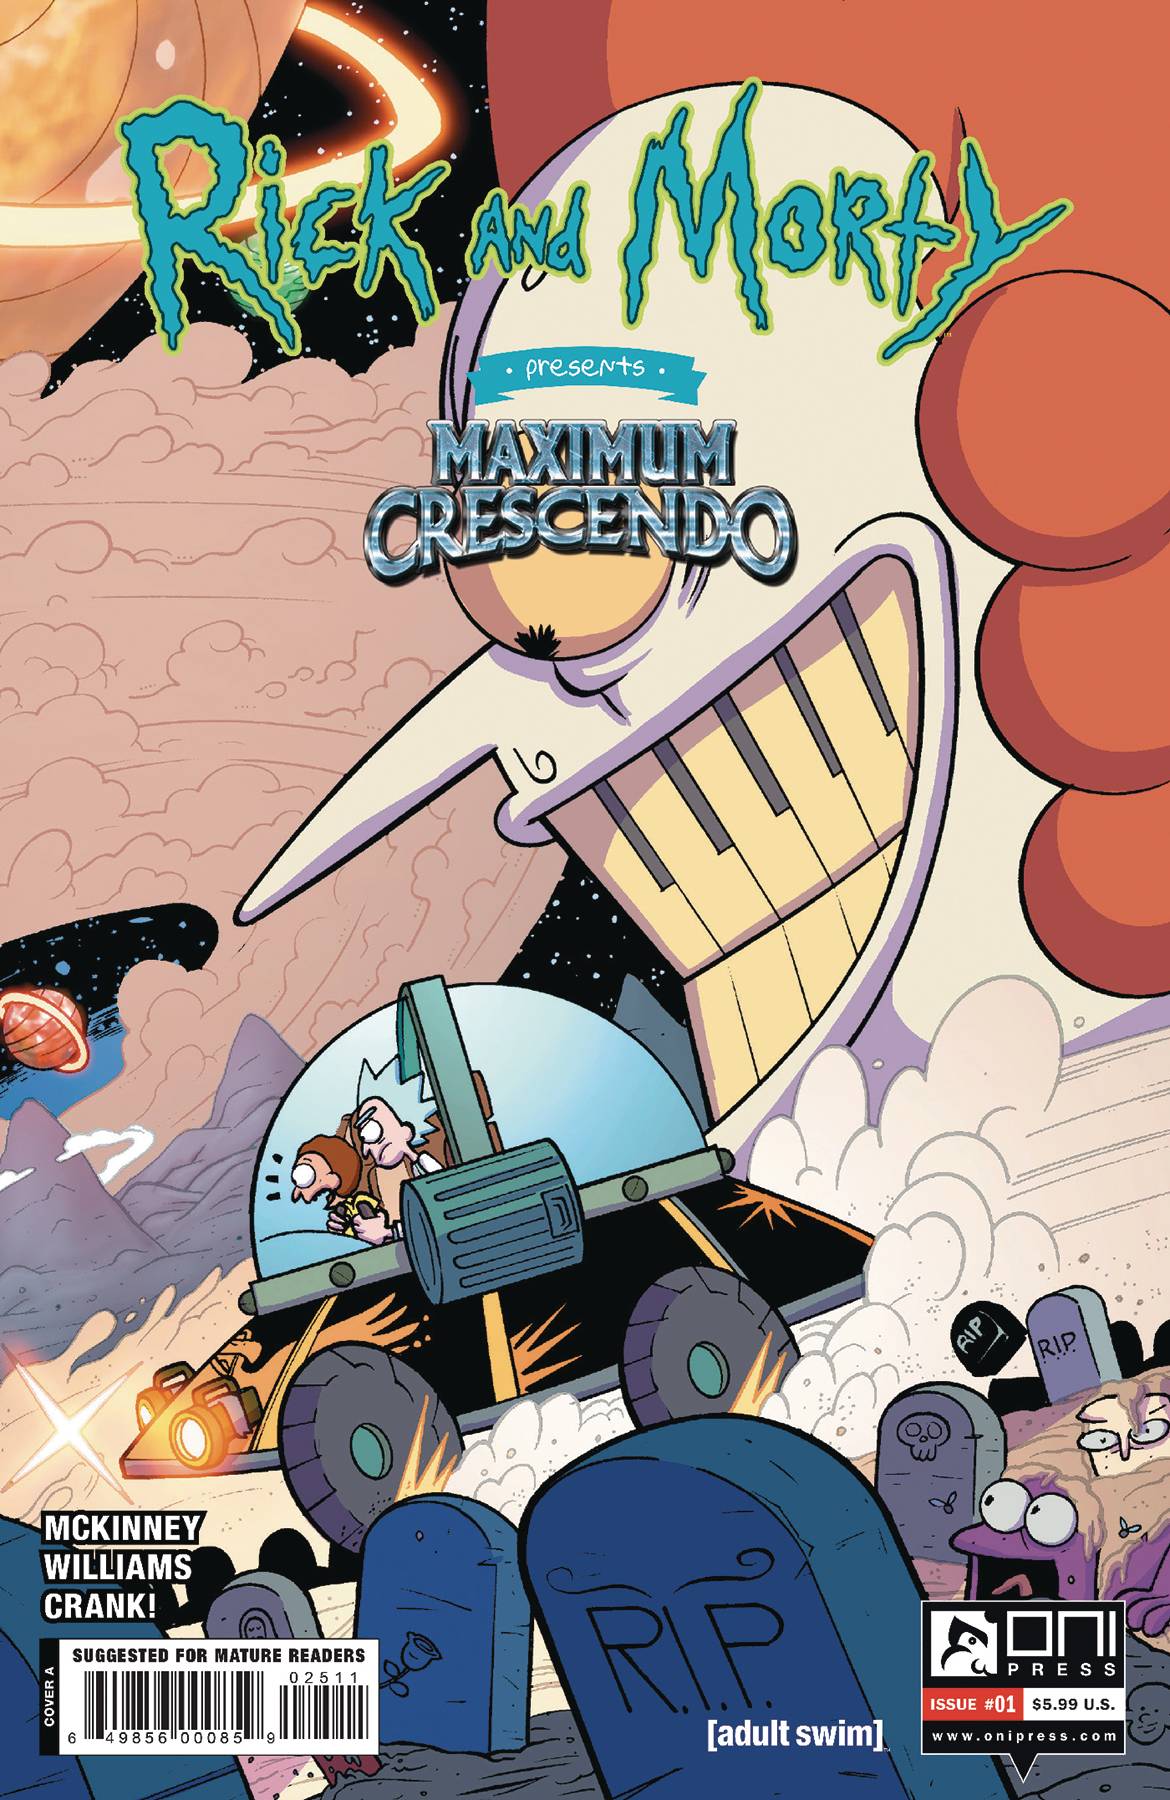 Rick and Morty Presents: Maximum Crescendo #1 Cover A